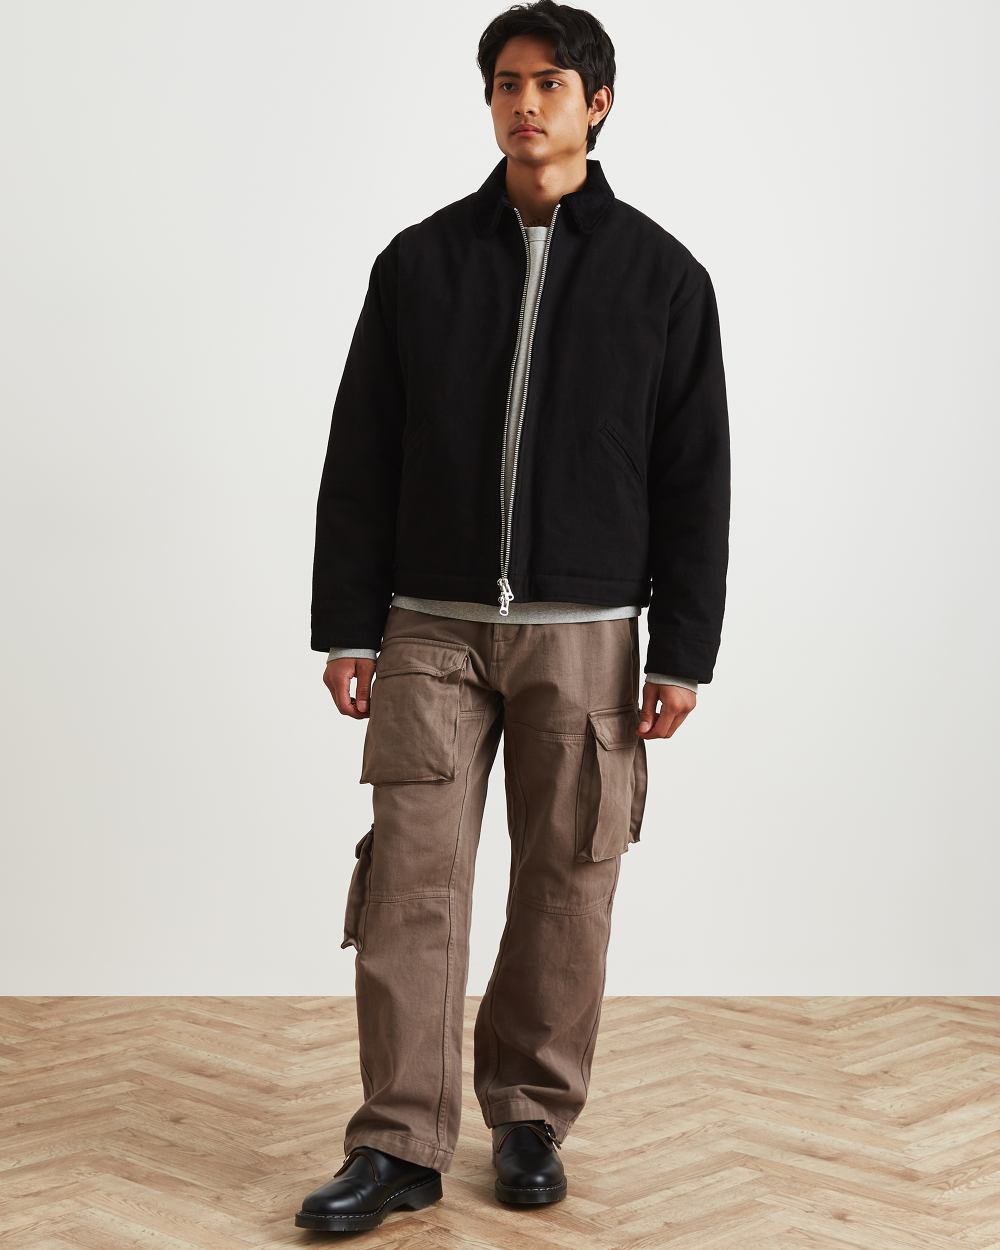 model wearing ronning's black zip up work jacket